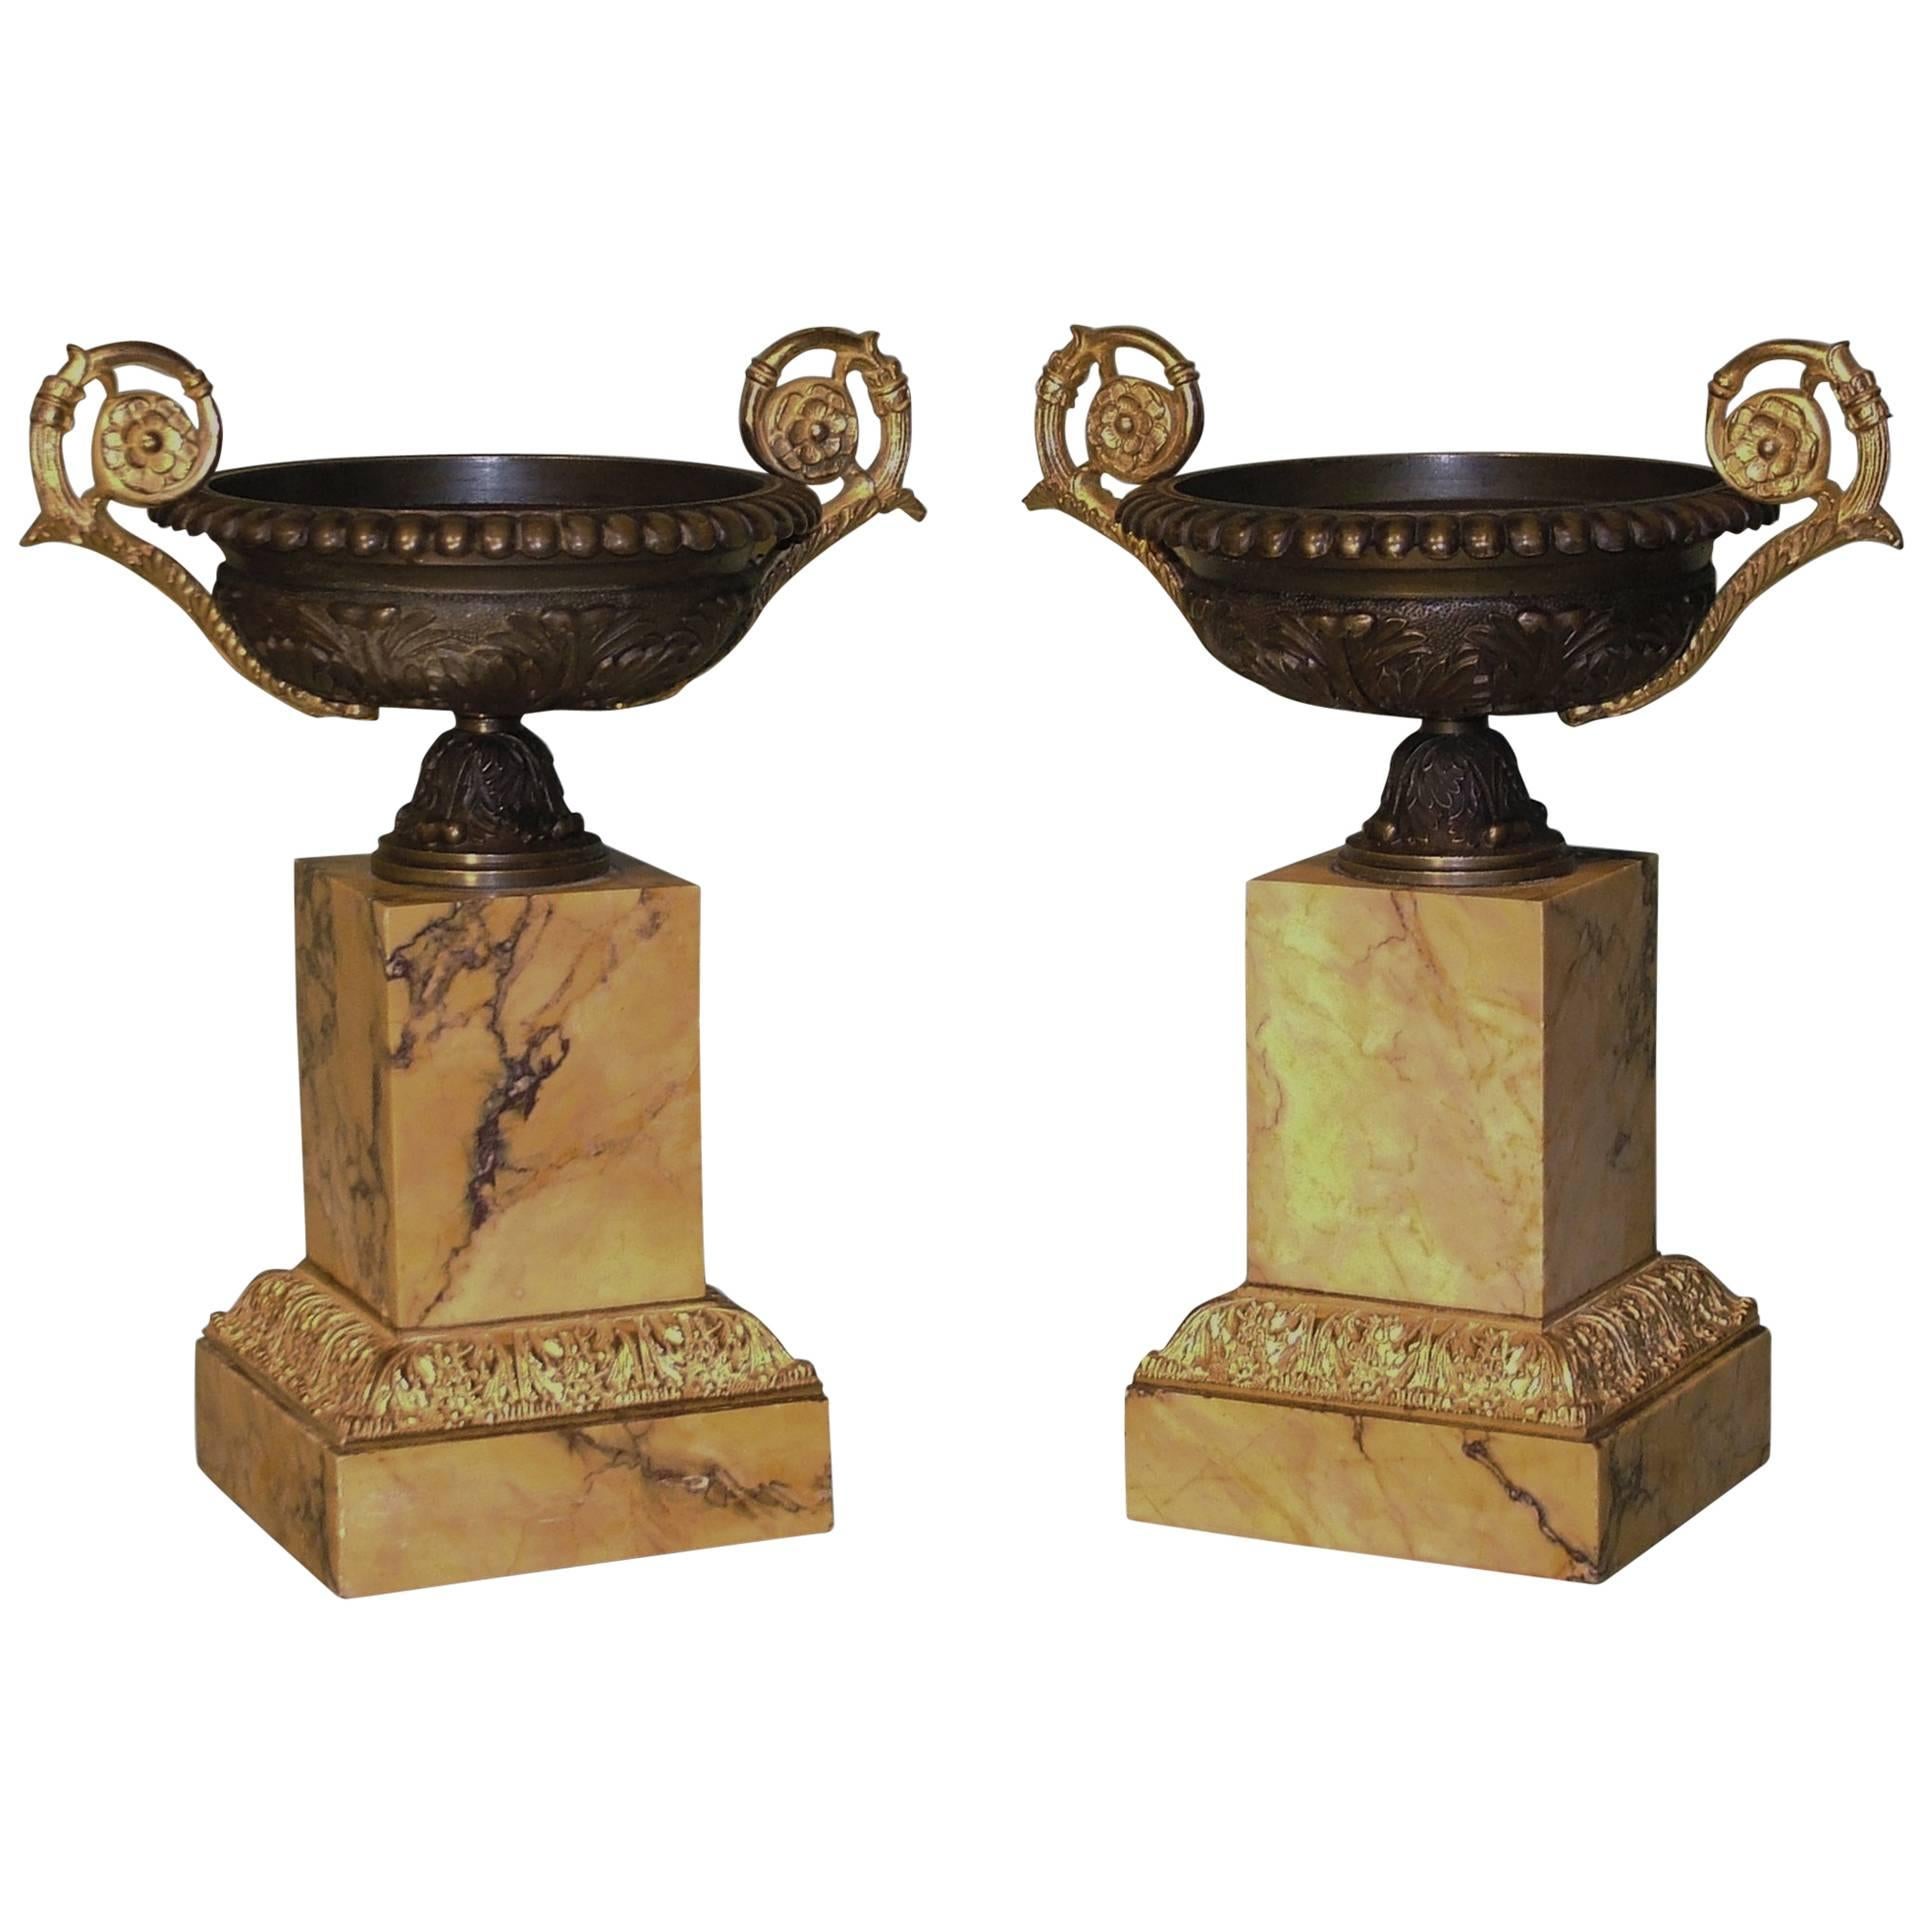 19th Century bronze and ormolu tazzas